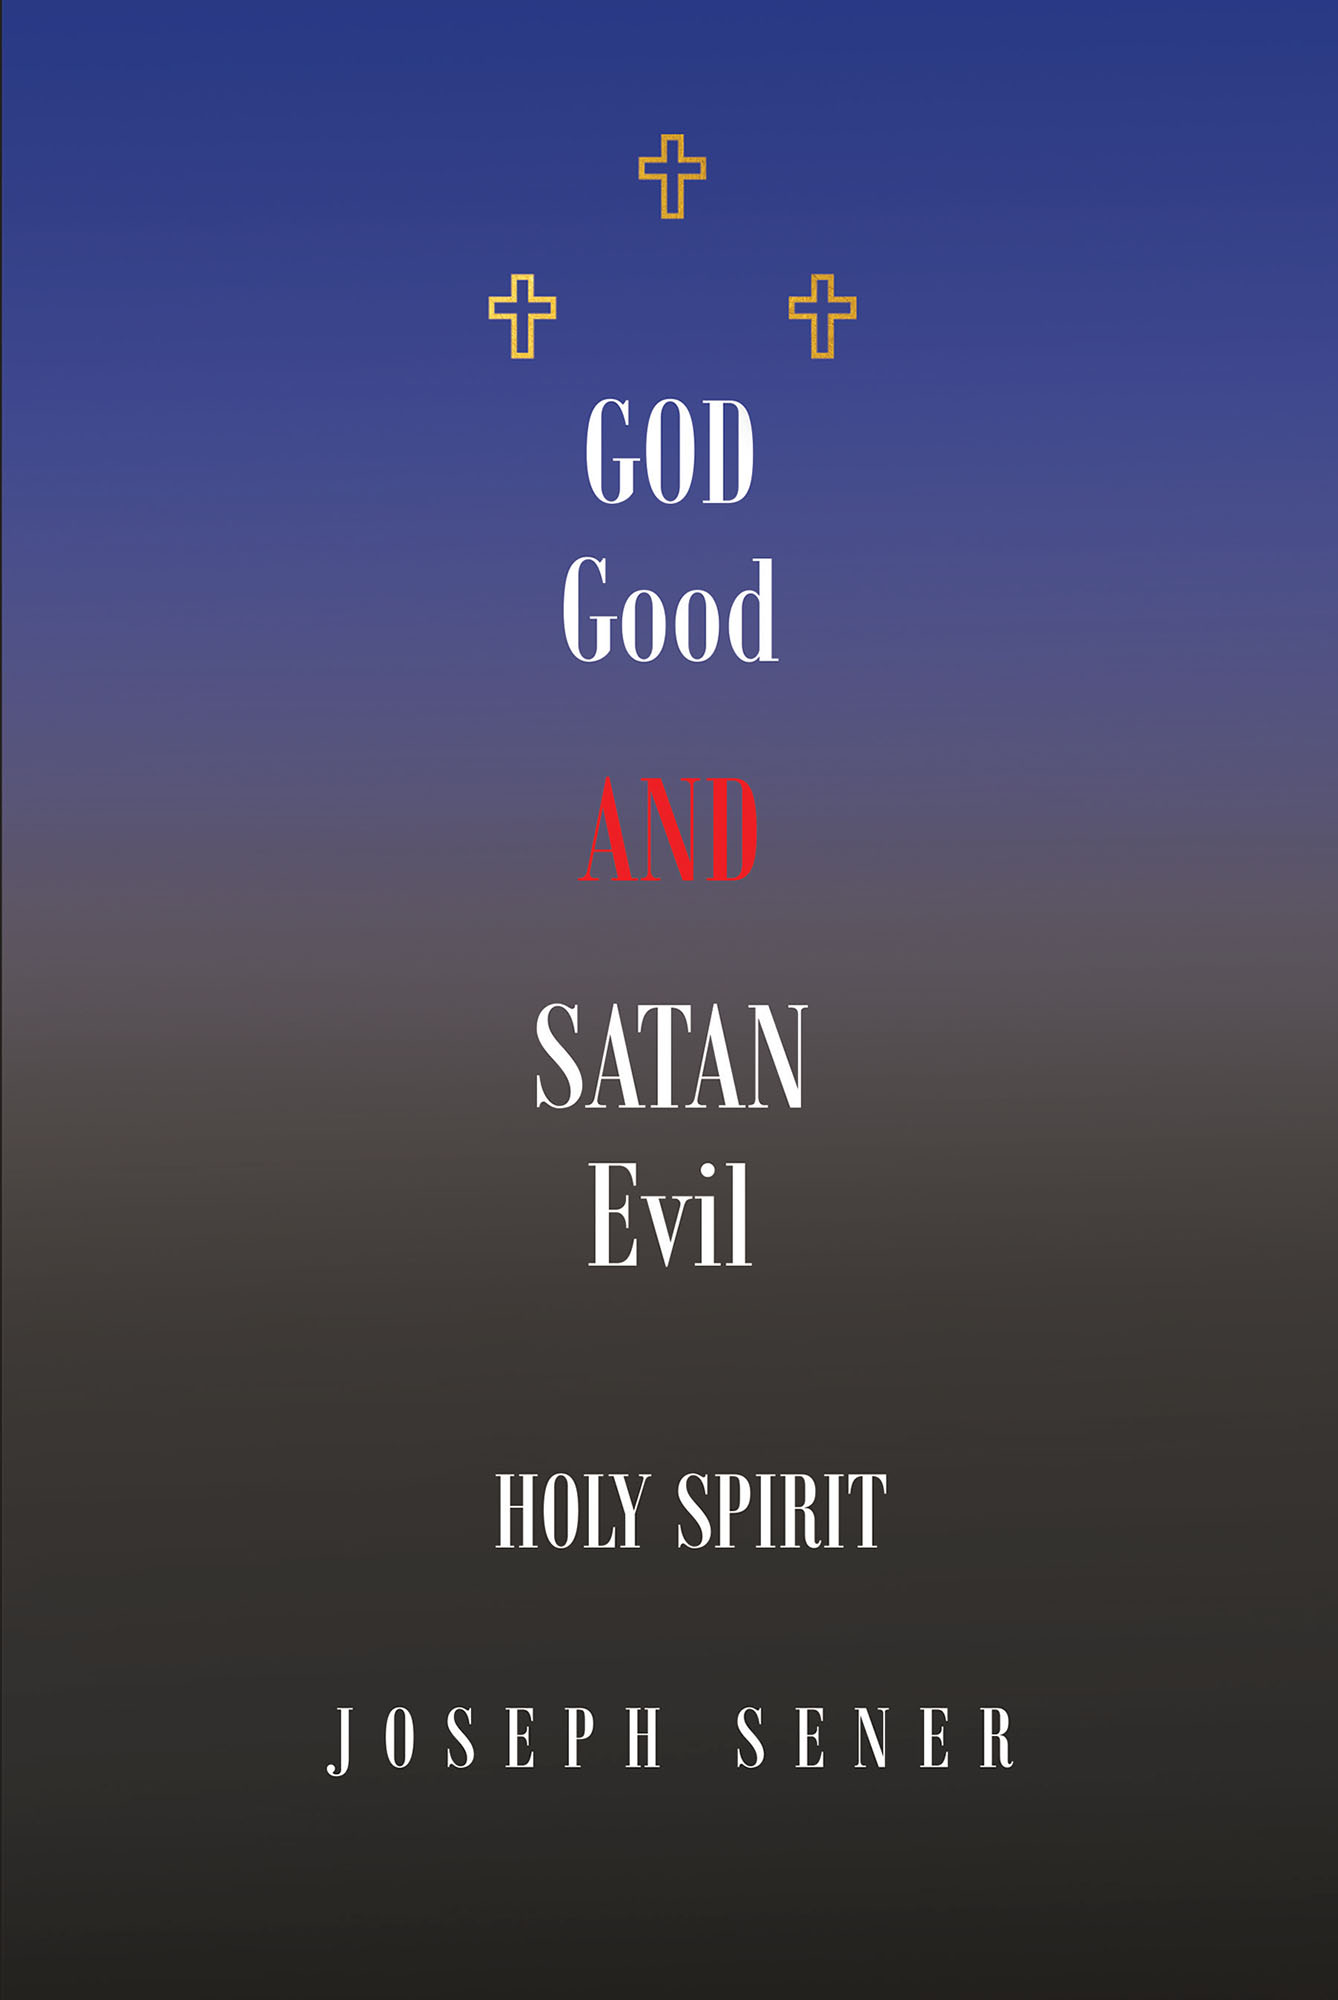 God Good and Satan Evil Cover Image